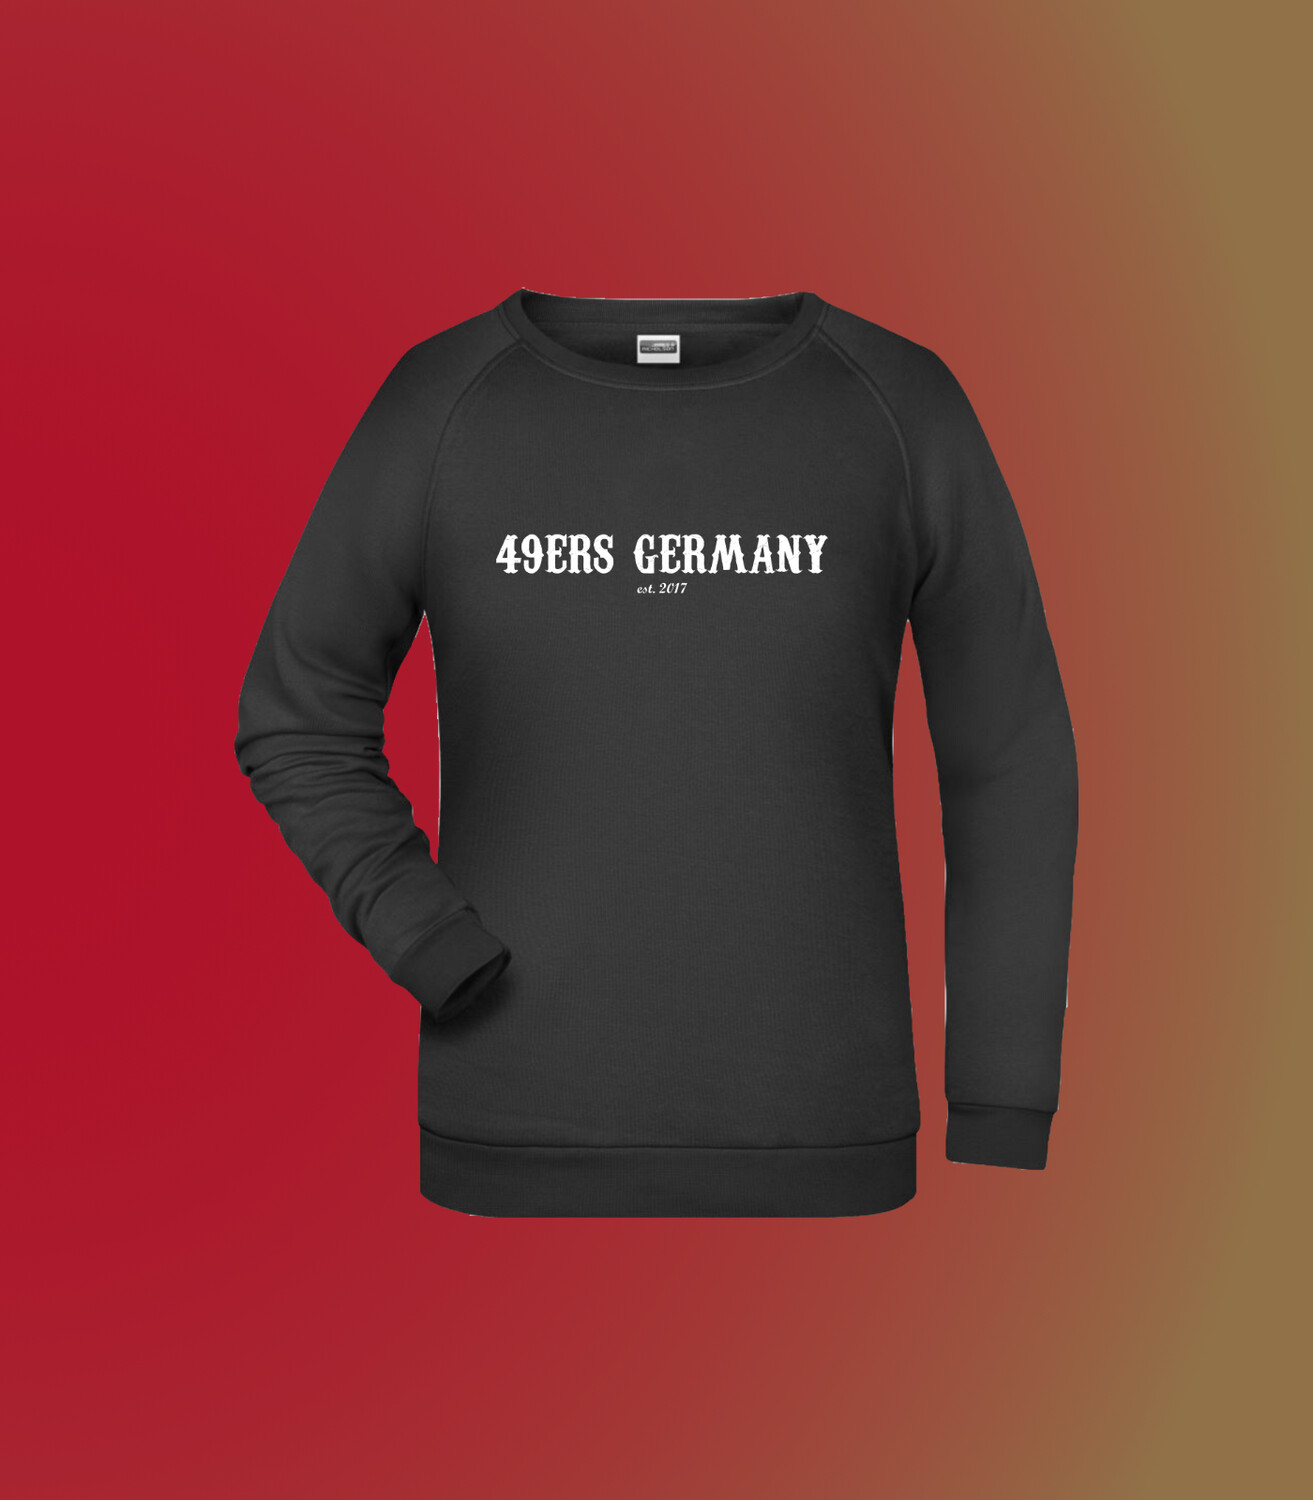 49ers Germany Damen Sweatshirt 